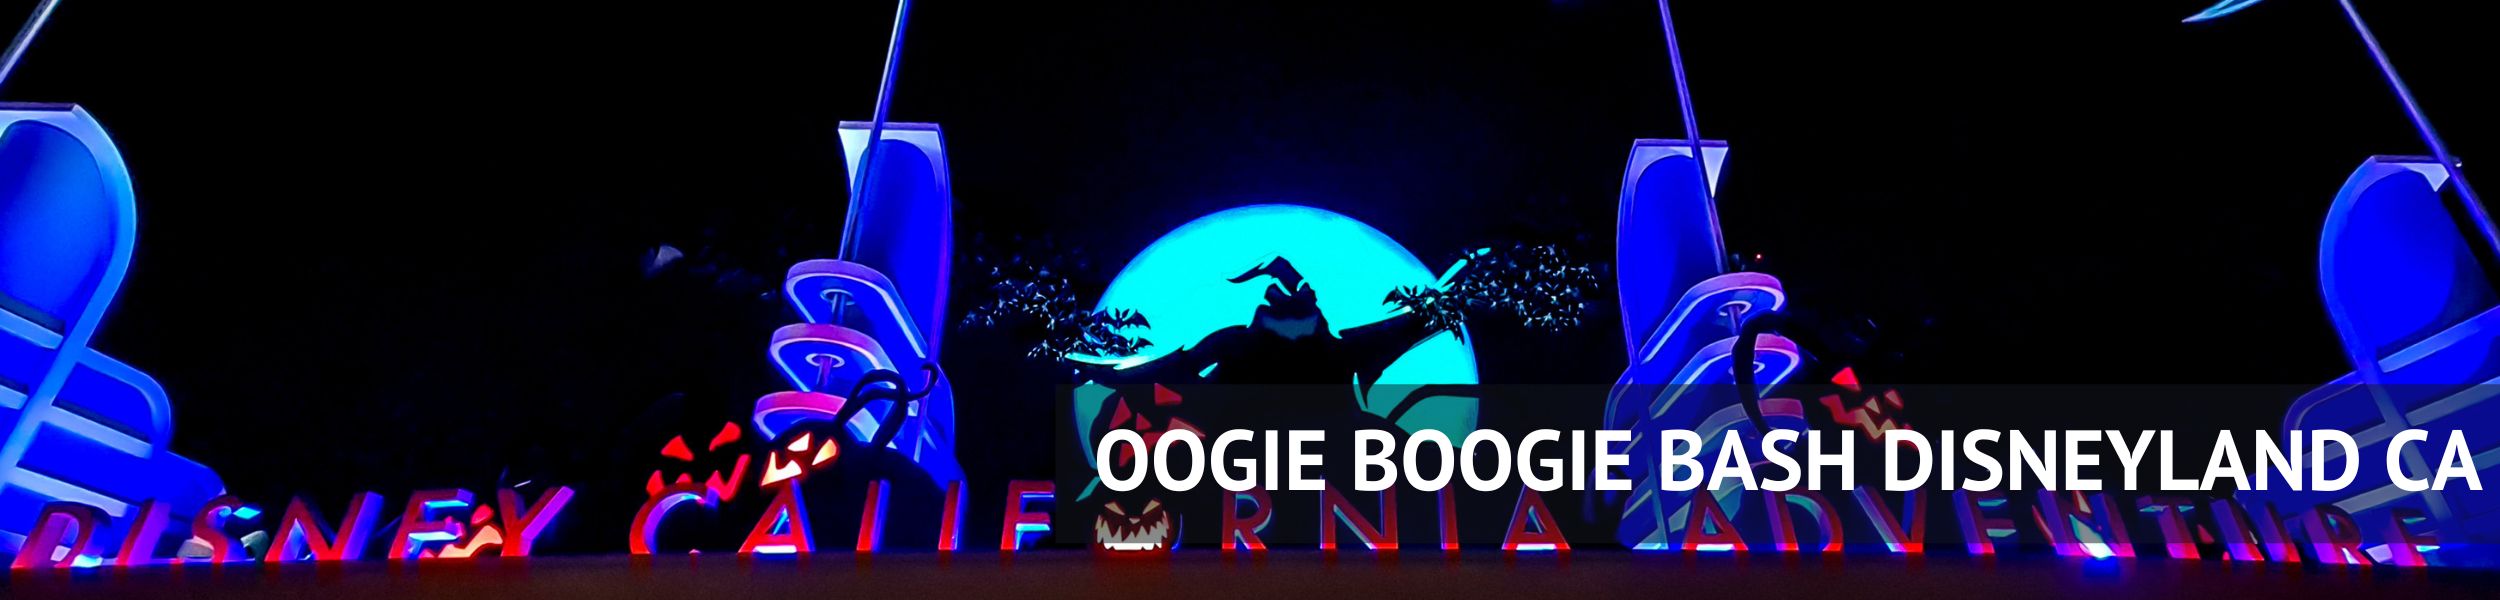 Oogie Boogie Bash Header